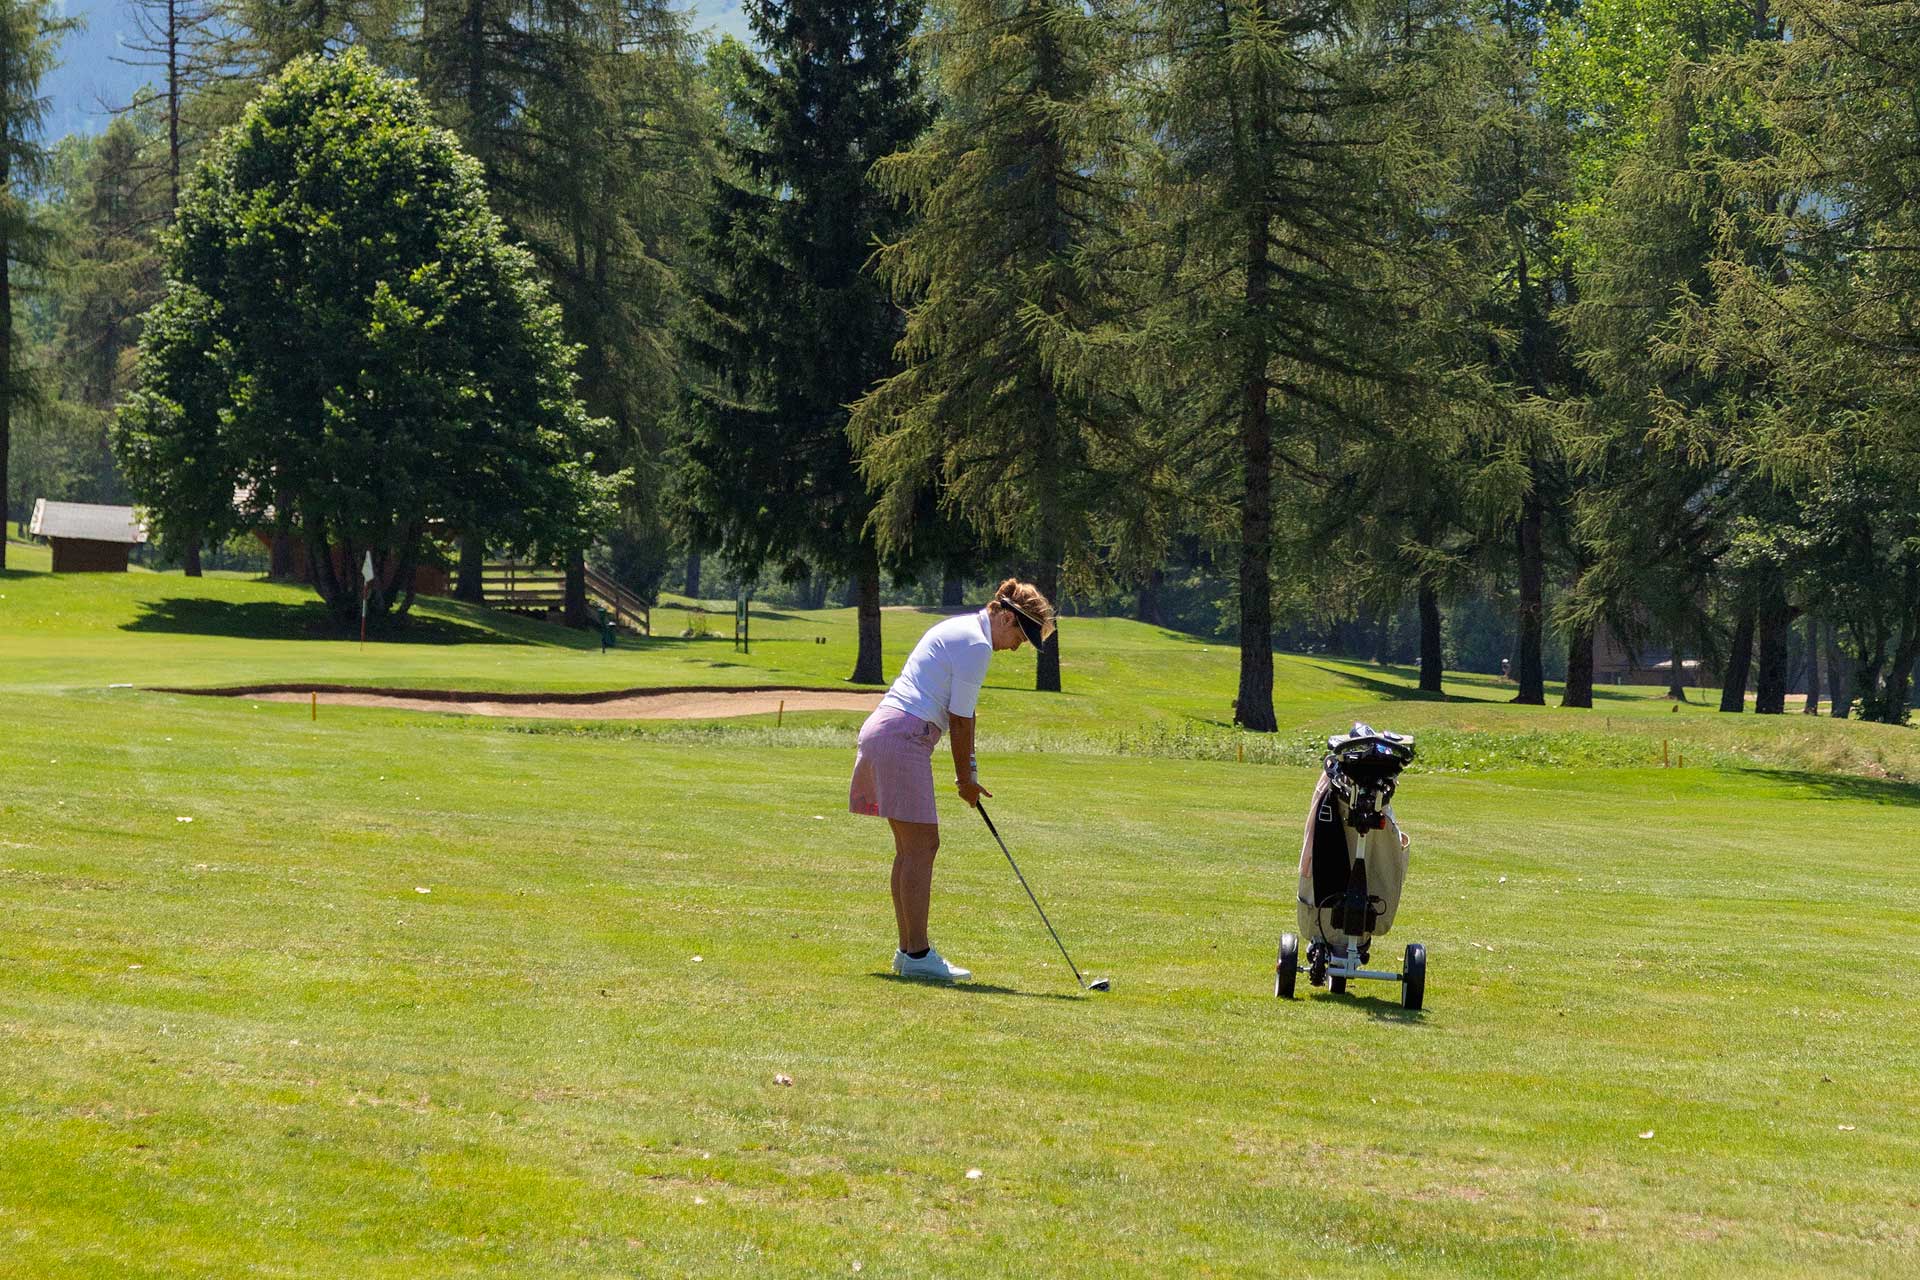 golfer-summer-activity-mont-arbois-megeve